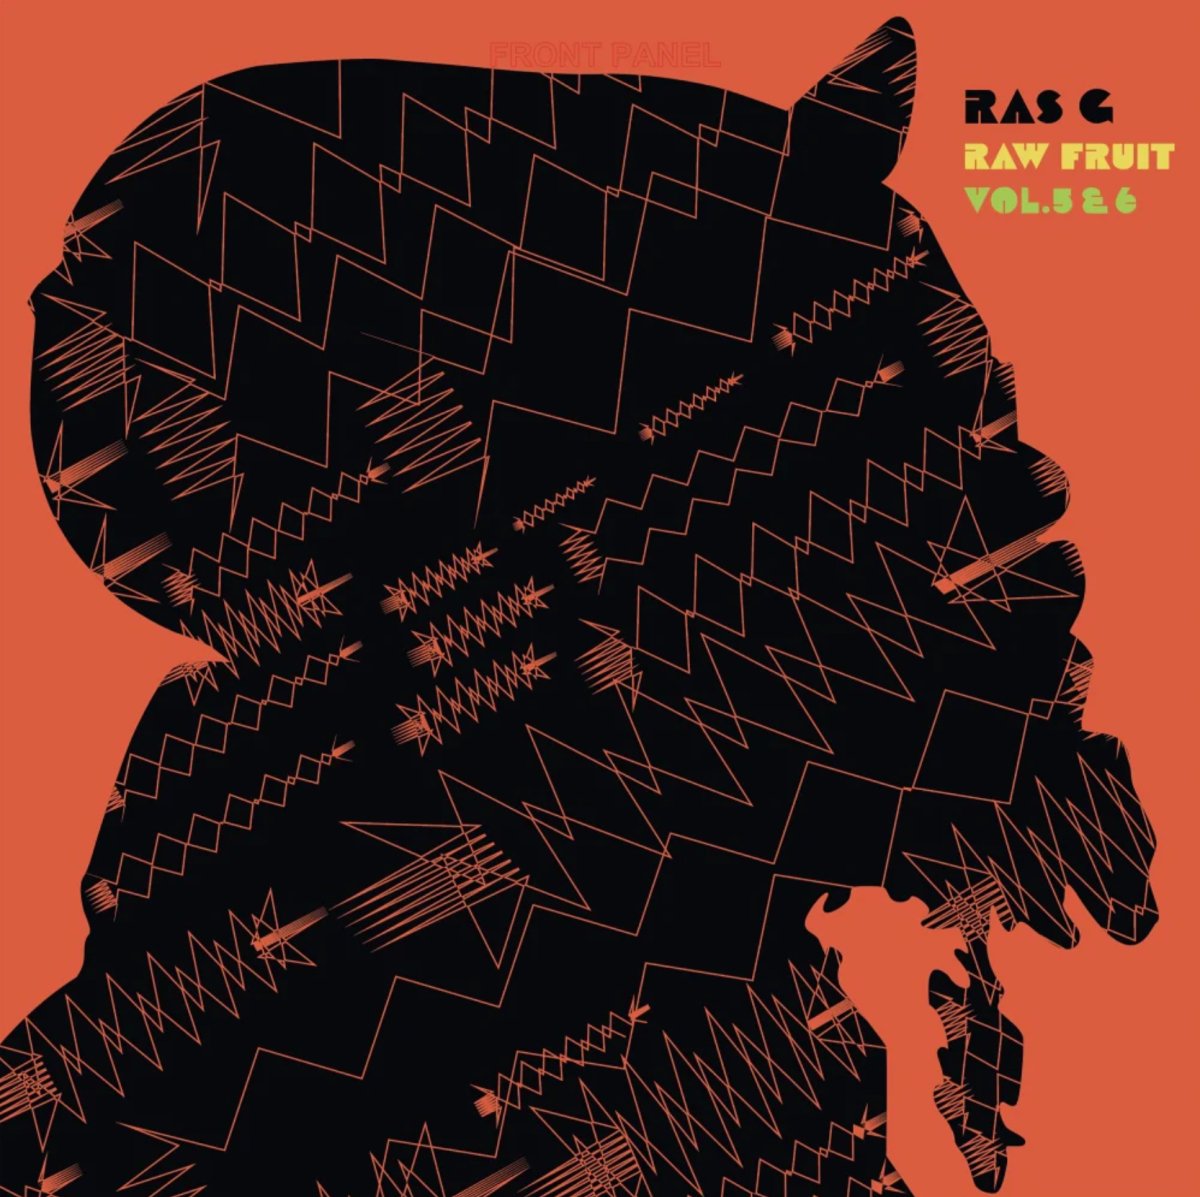 Ras G - Raw Fruit Vol. 5 & 6 - Inner Ocean Records